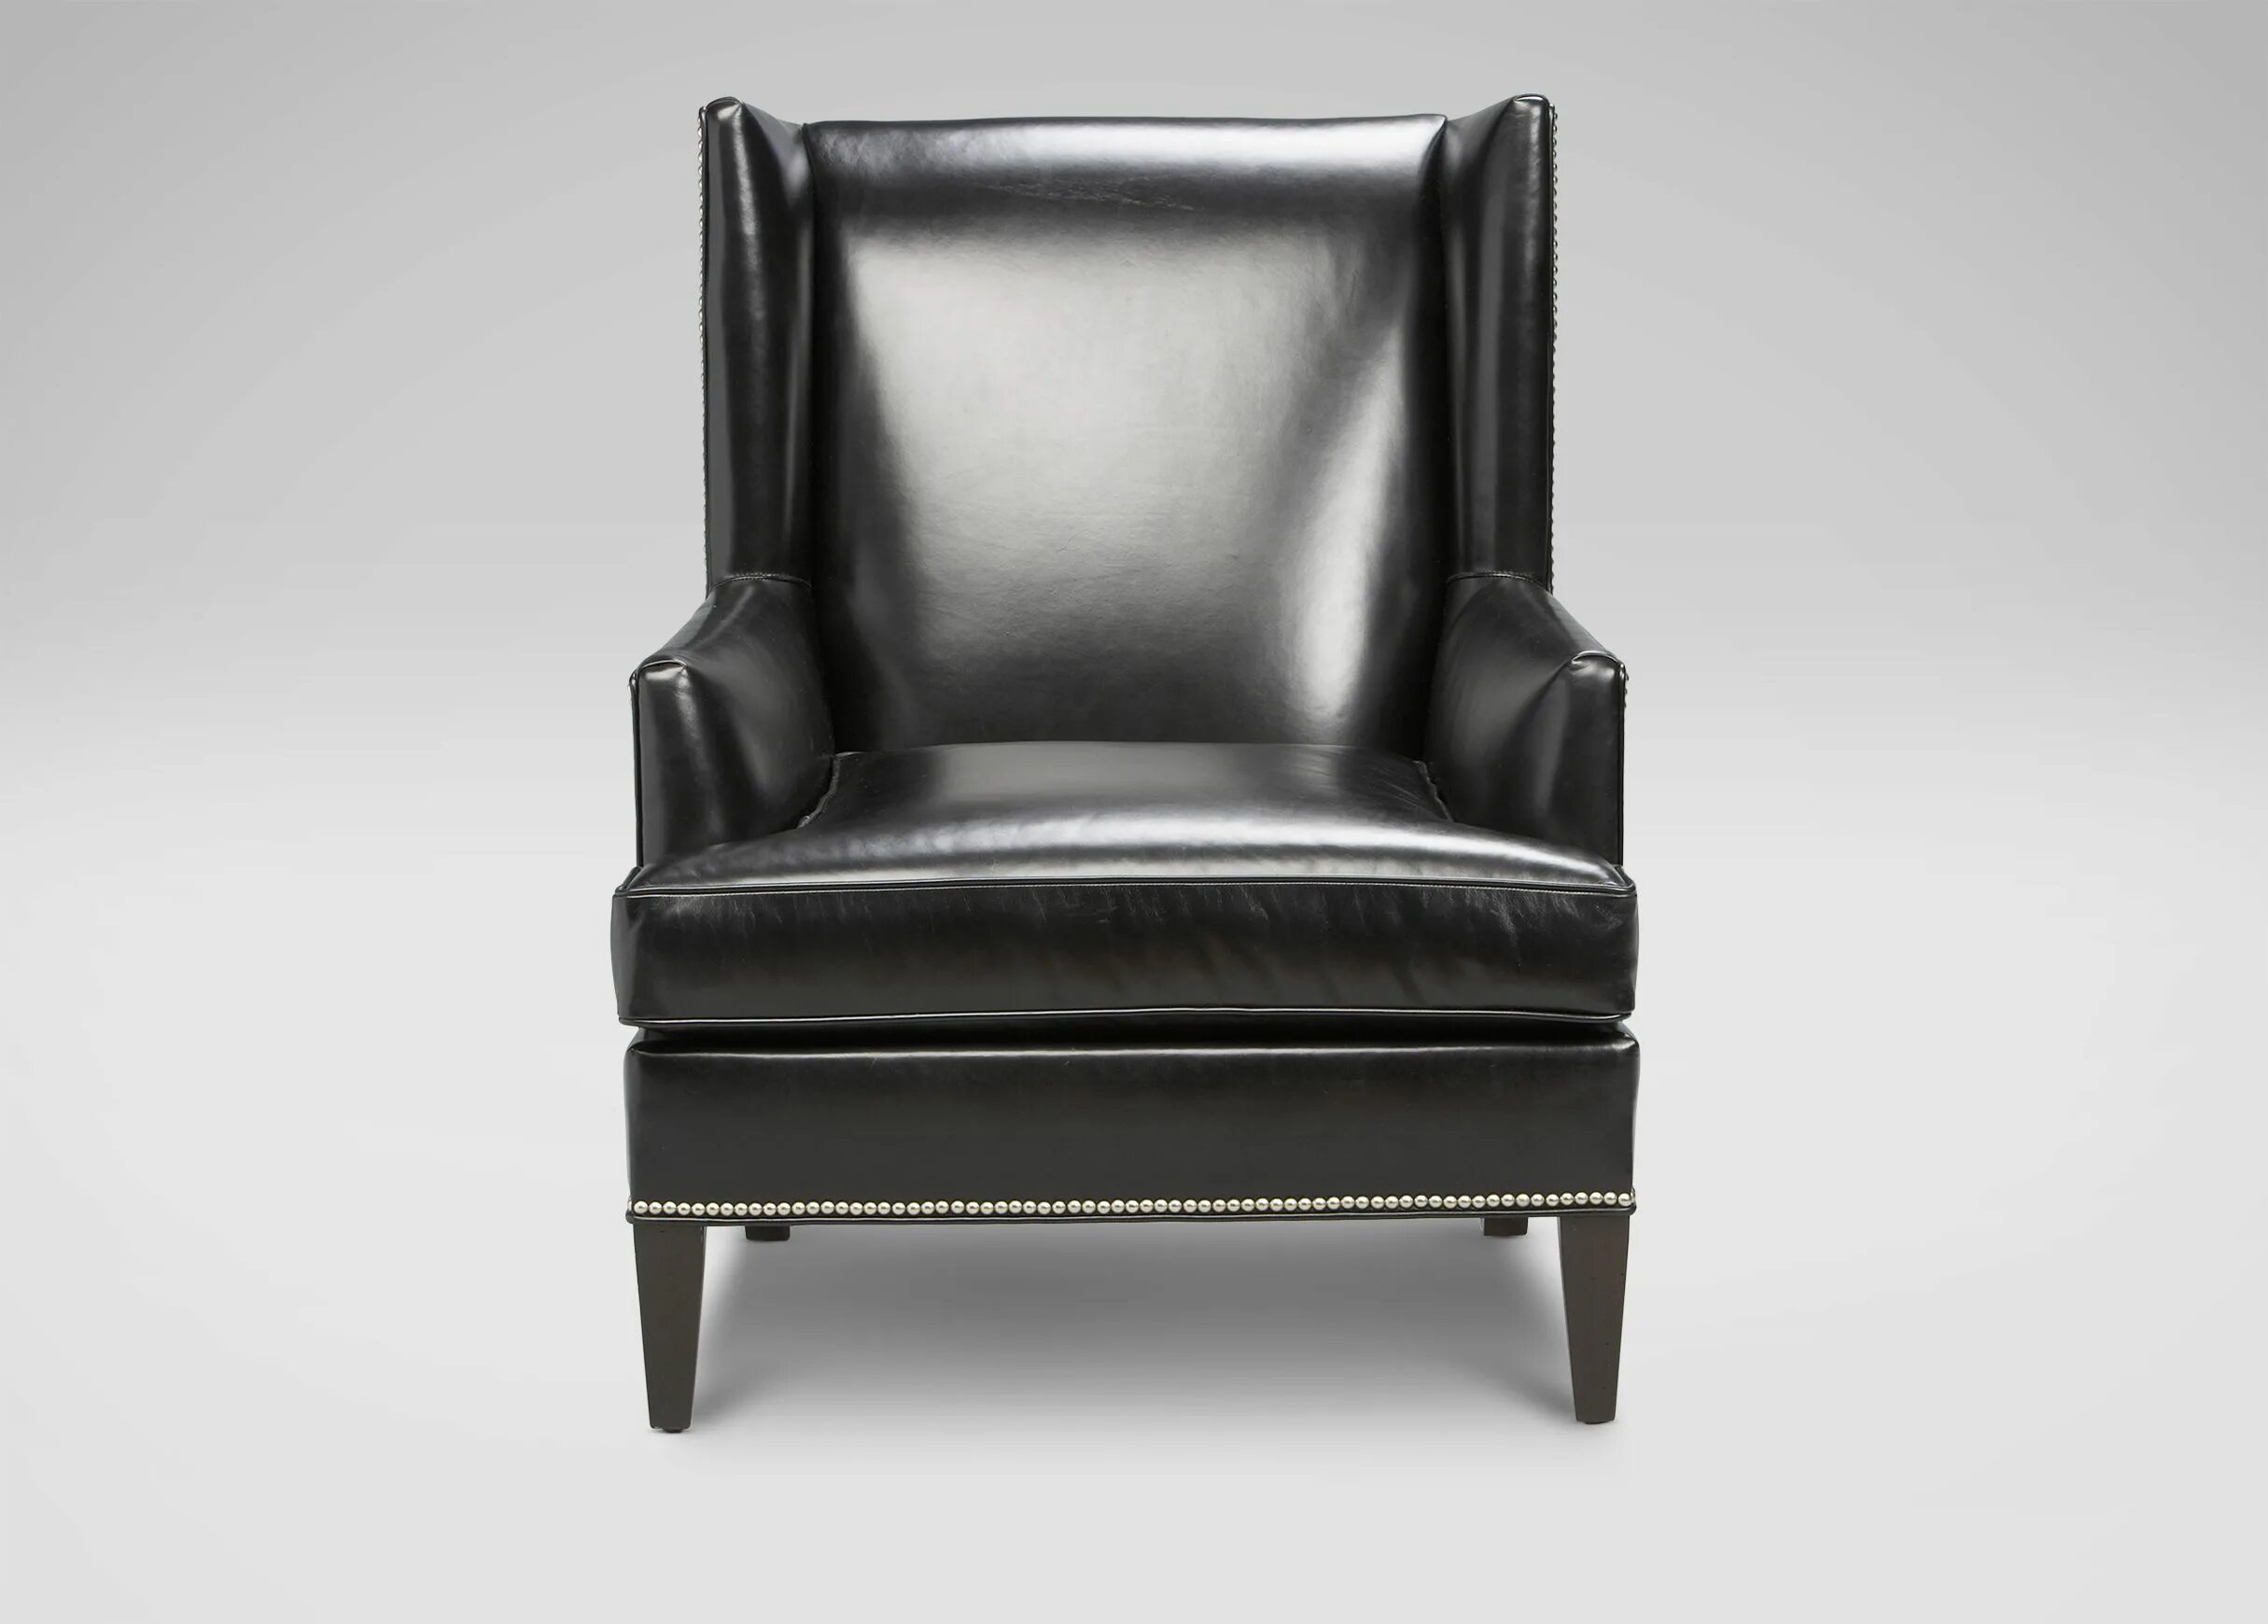 Ое кресло. Кресло Savoy Leather Chair. Кресло Wingback Chair. Кресло Chair Cyrus 112508. Кресло кожаное Furniture 9589 Black.